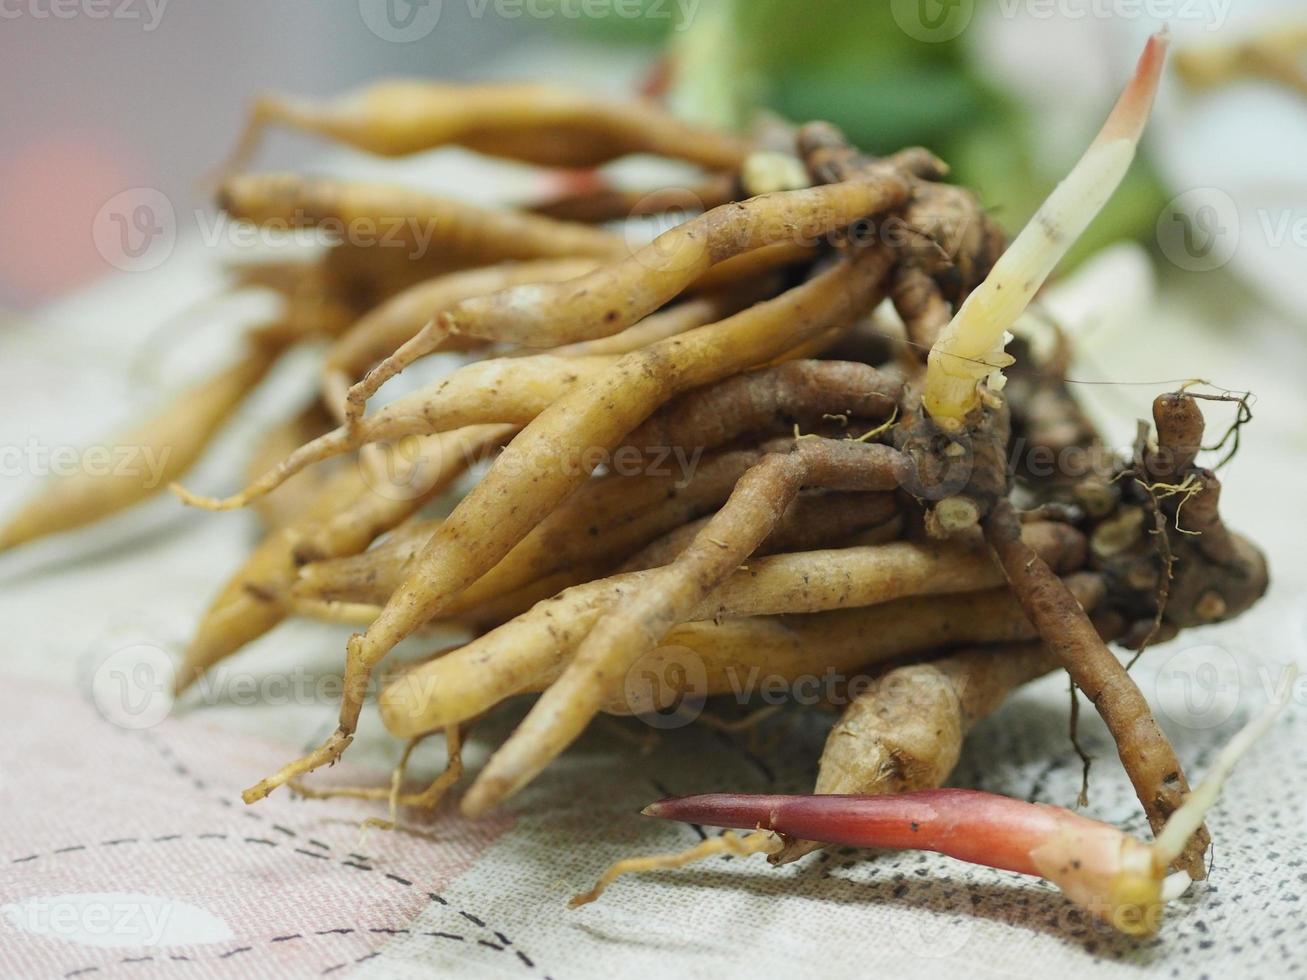 krachai boesenbergia ingerroot moindre galanga ou gingembre chinois herbe culinaire de chine photo